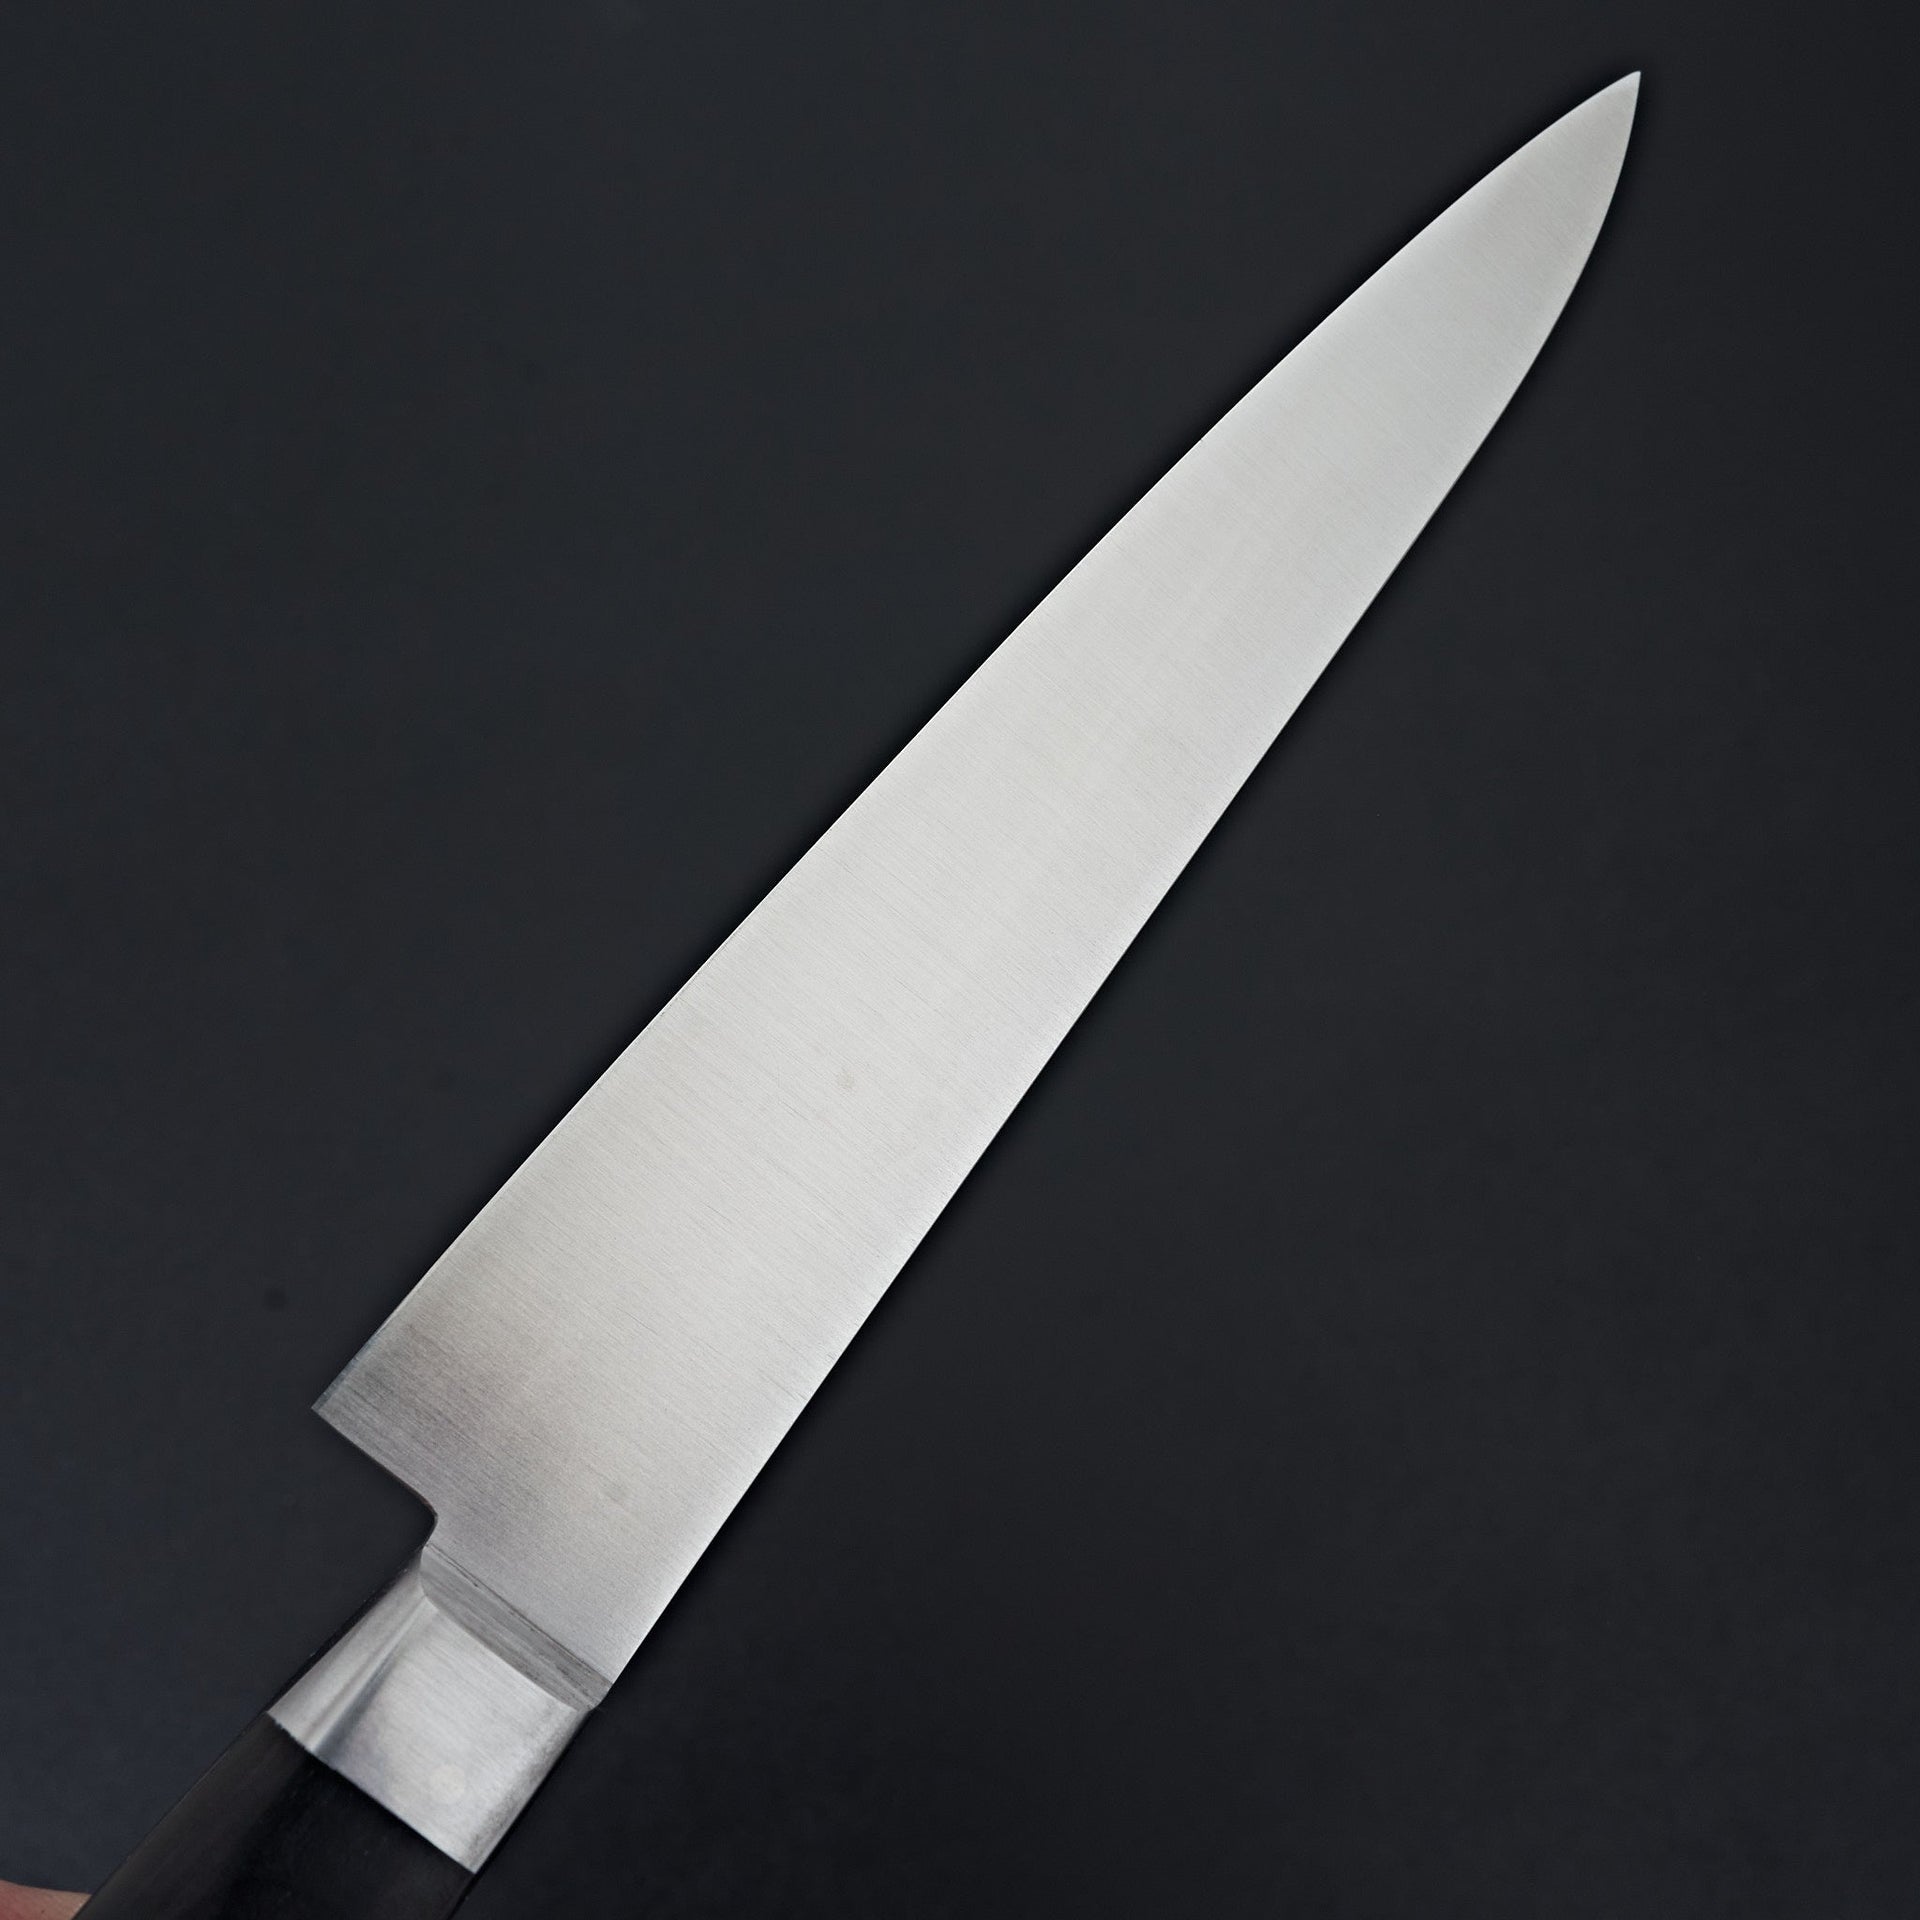 Ashi Ginga Stainless Western Petty 180mm-Knife-Ashi Hamono-Carbon Knife Co